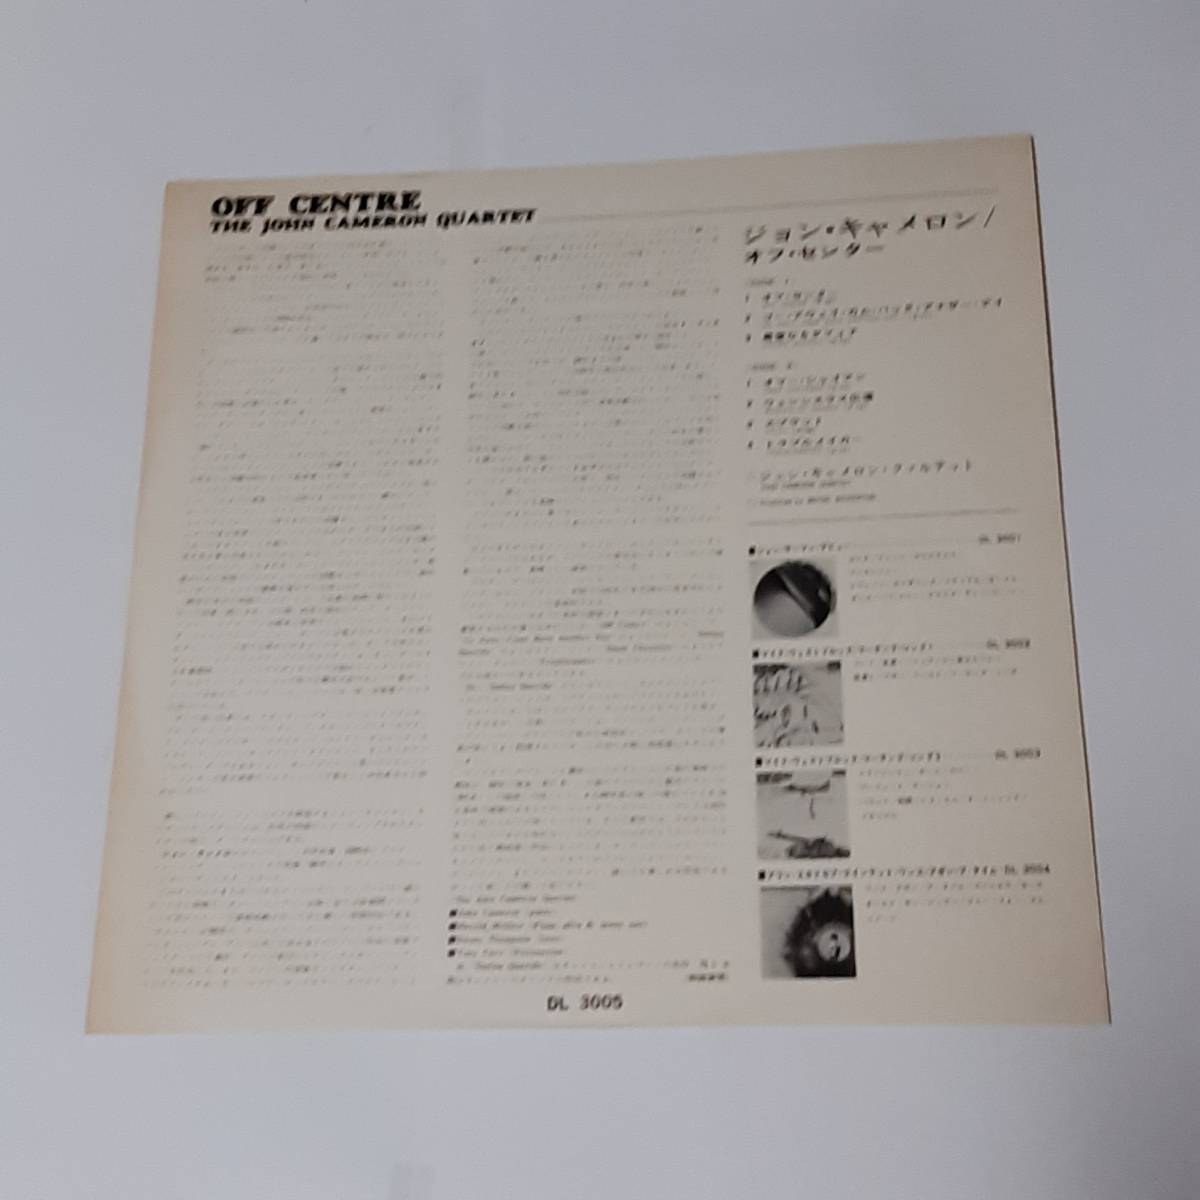 THE JOHN CAMERON(ジョン・キャメロン) QUARTET/Off Centre 国内盤LP/プロモ盤/DL 3005_画像3